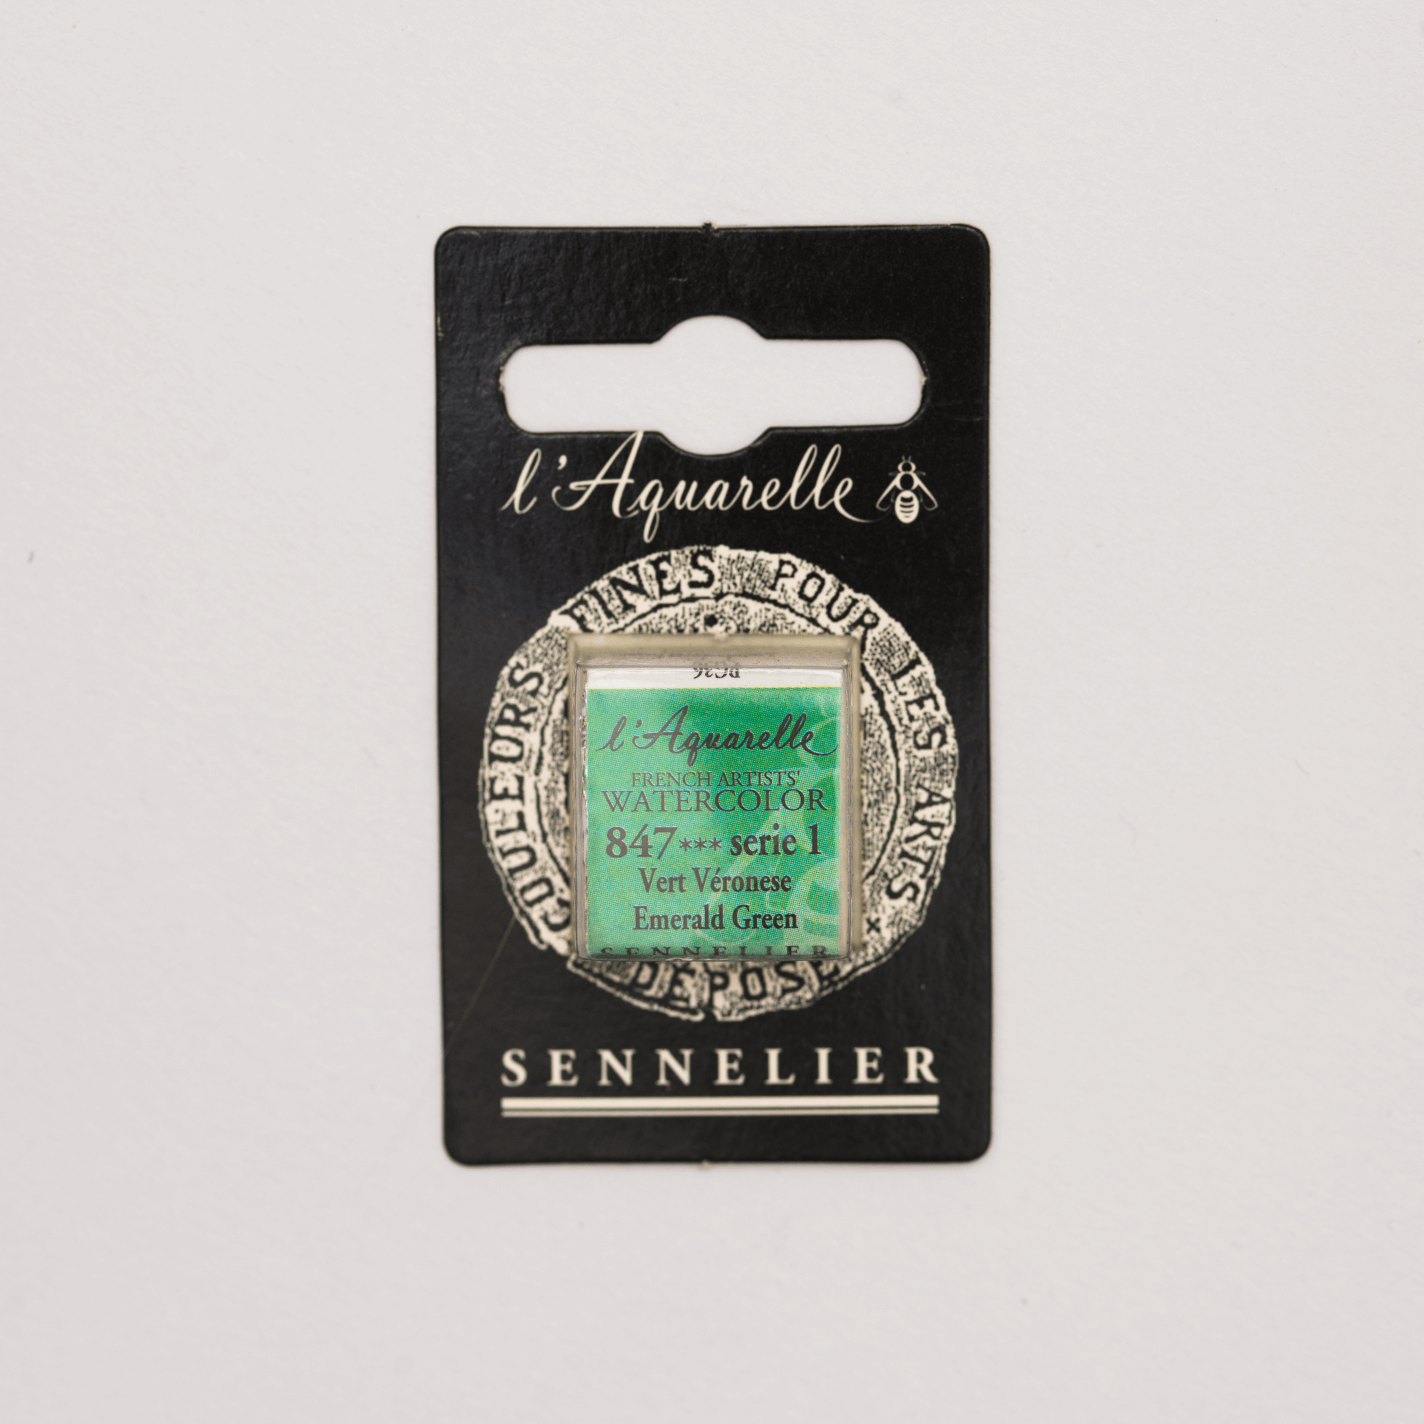 Sennelier Aquarelle pans 1/2 pan Emerald Green